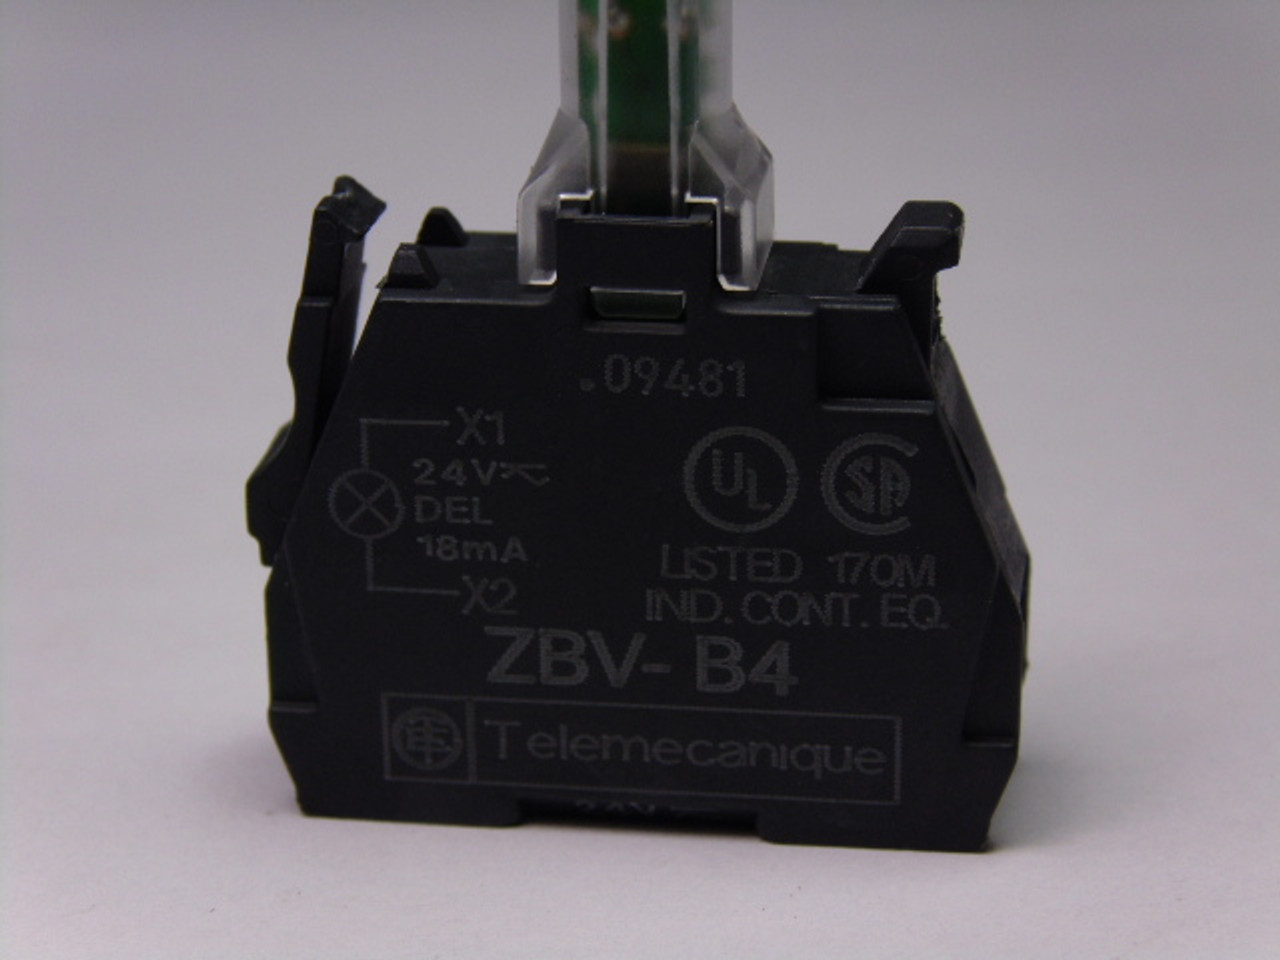 Telemecanique ZBV-B4 Pushbutton Light Module 22mm 24V USED